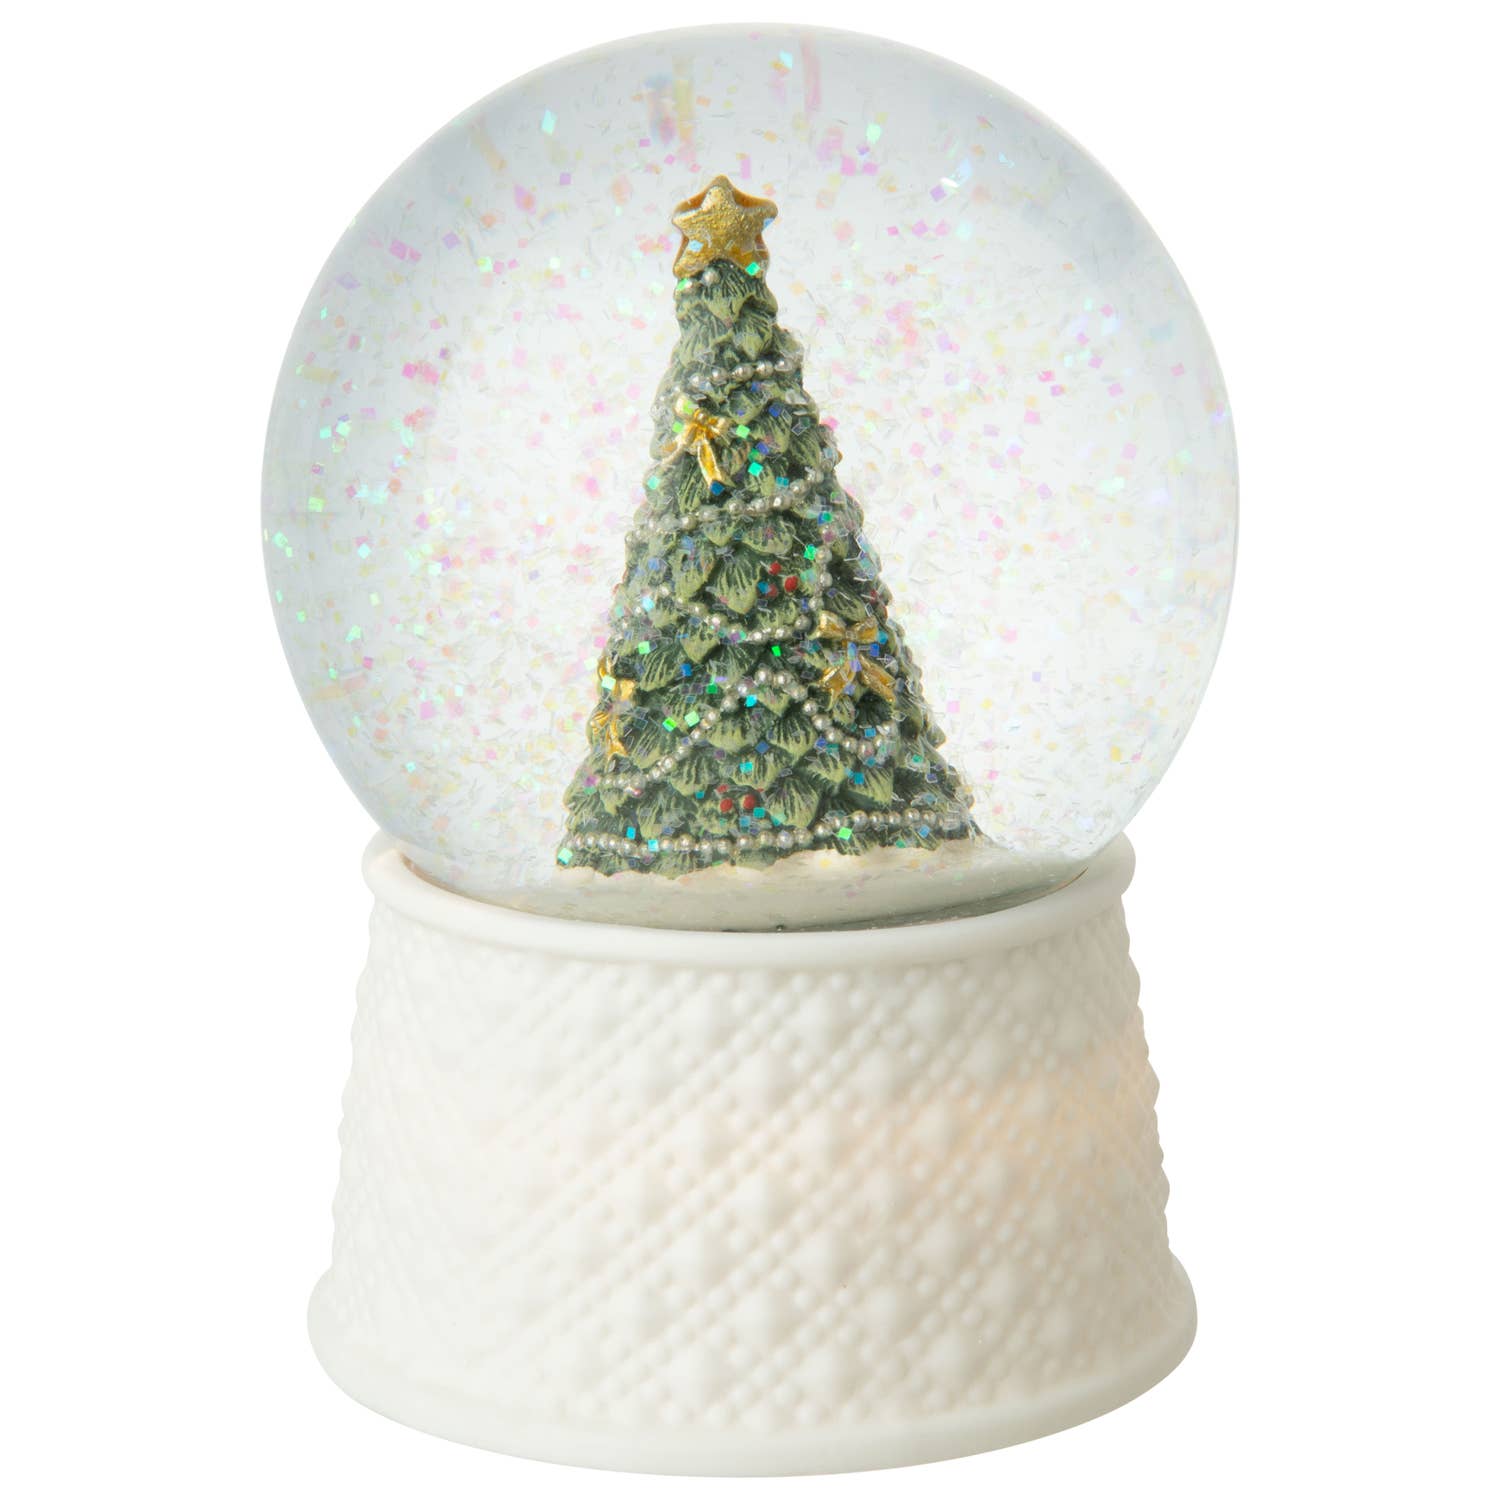 Beautiful Christmas Home Decor. Christmas Tree Snow Globe